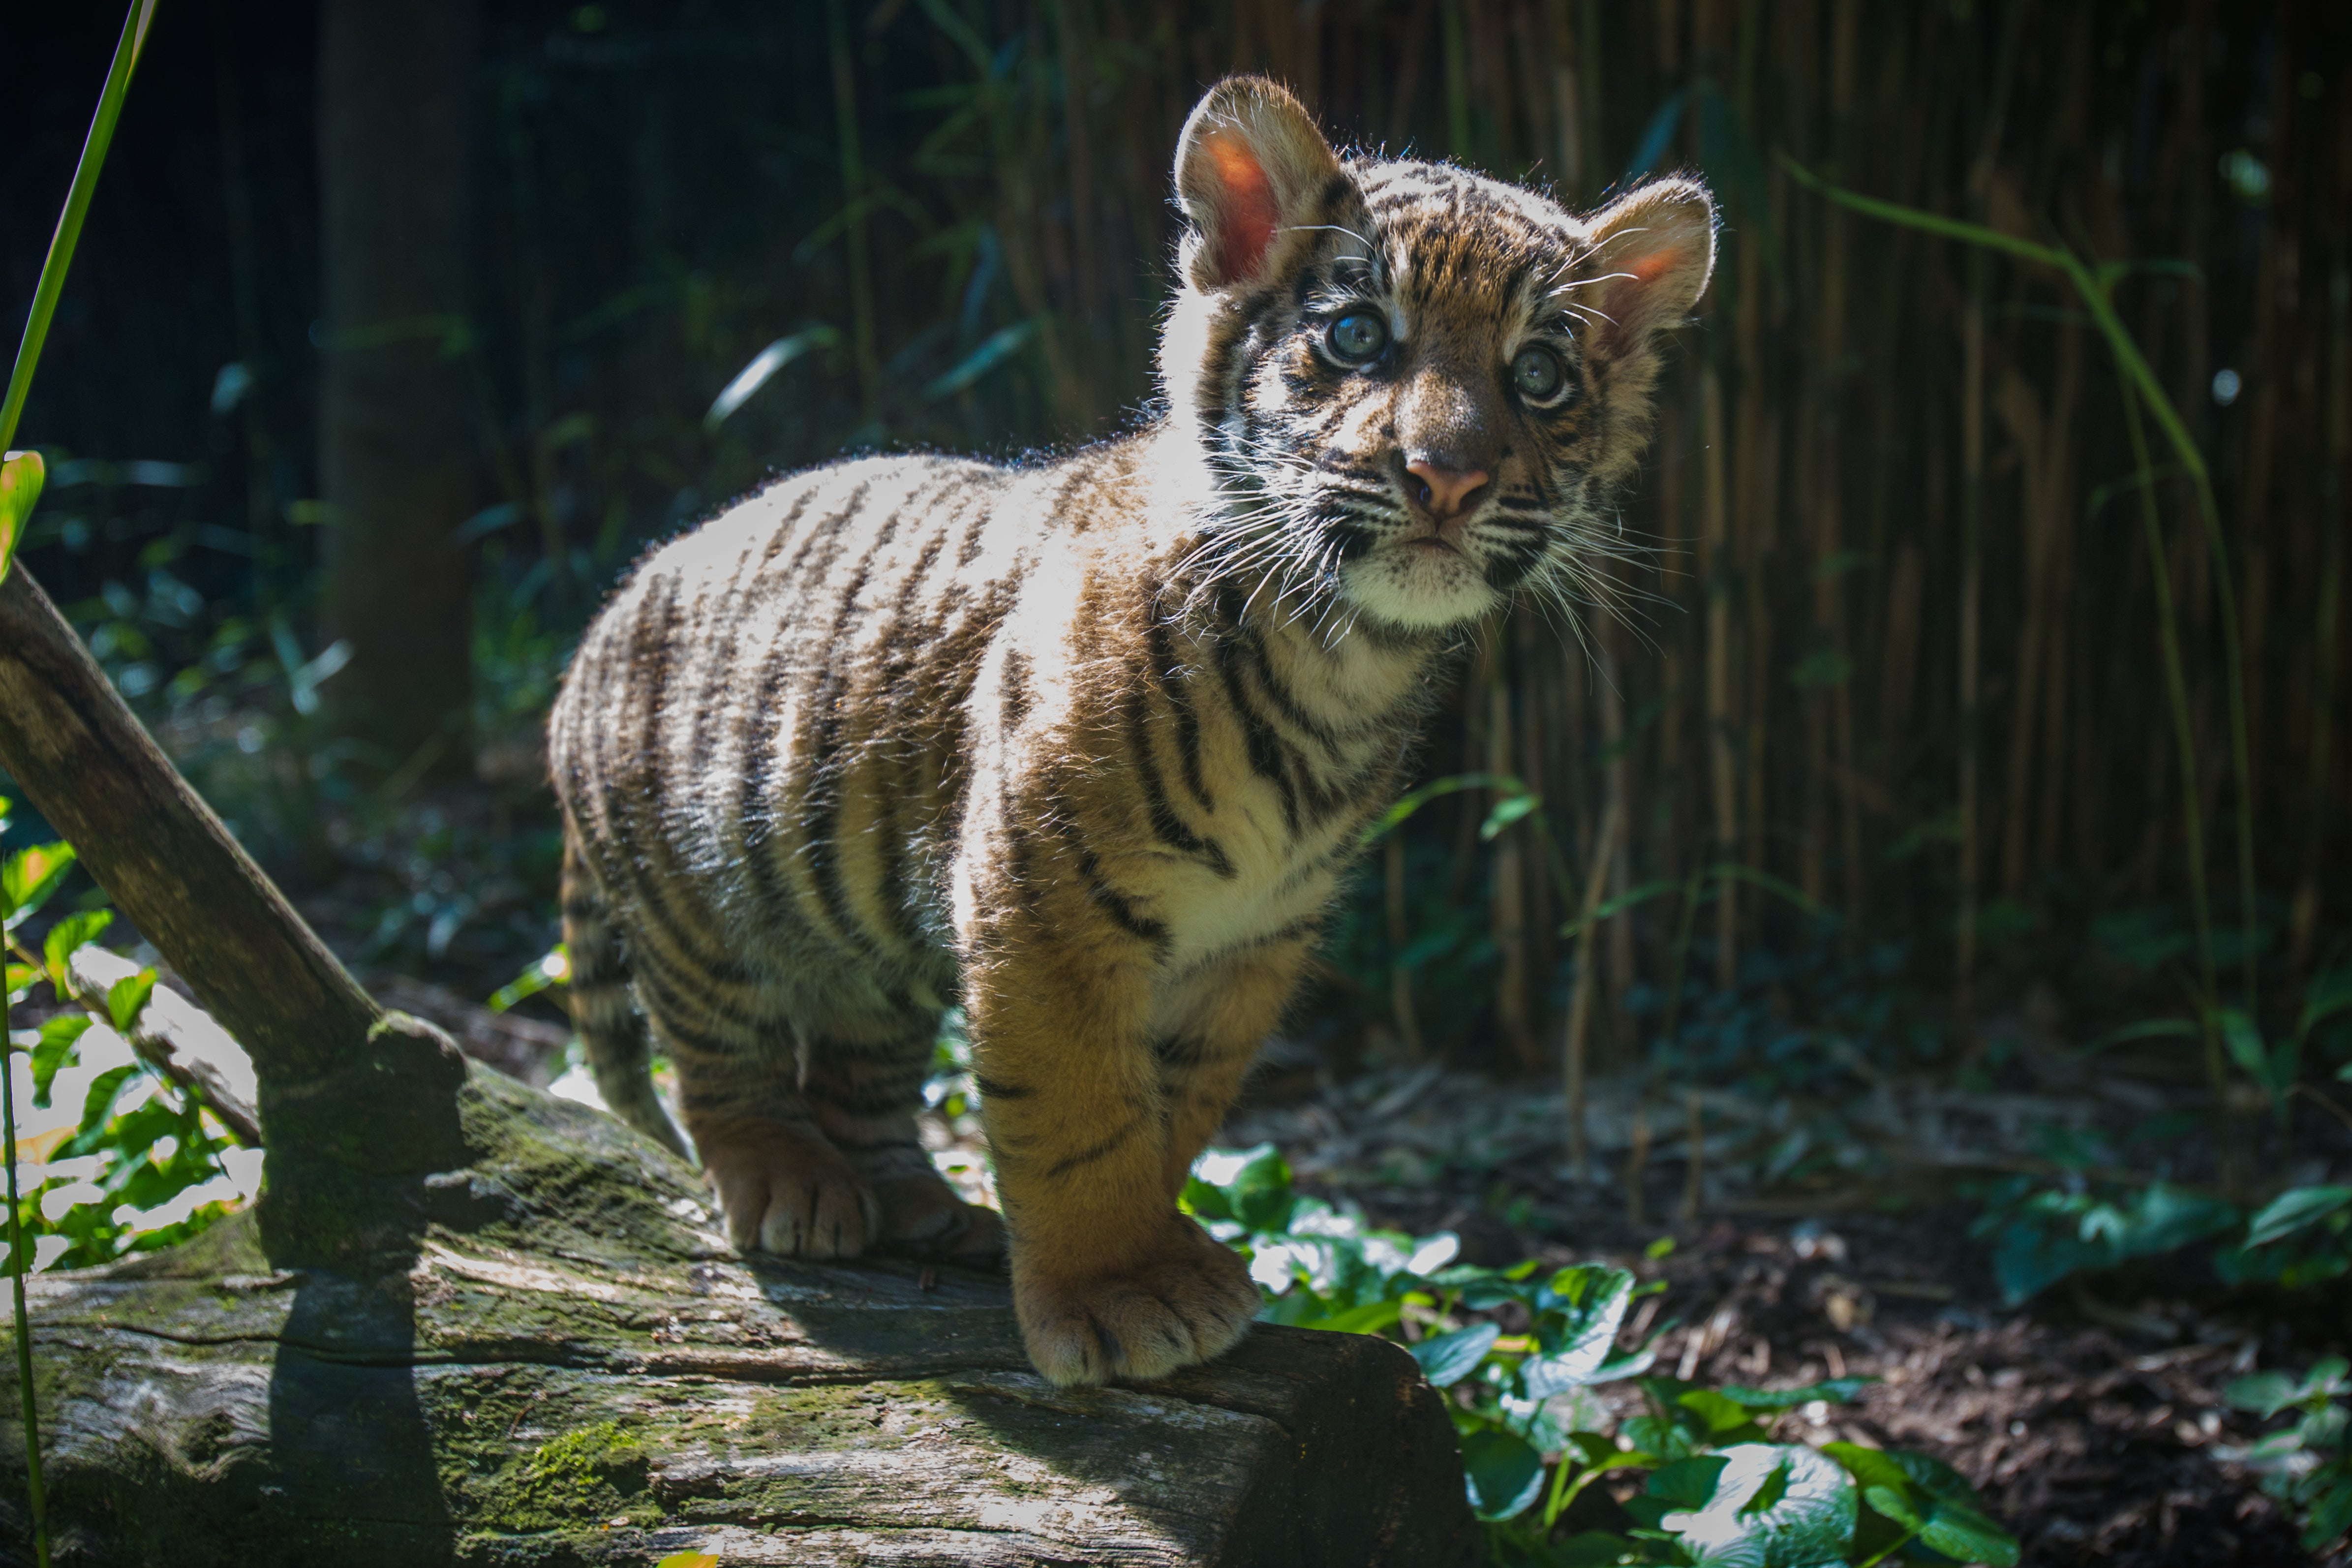 A Sumatran tiger cub standing in the dirt